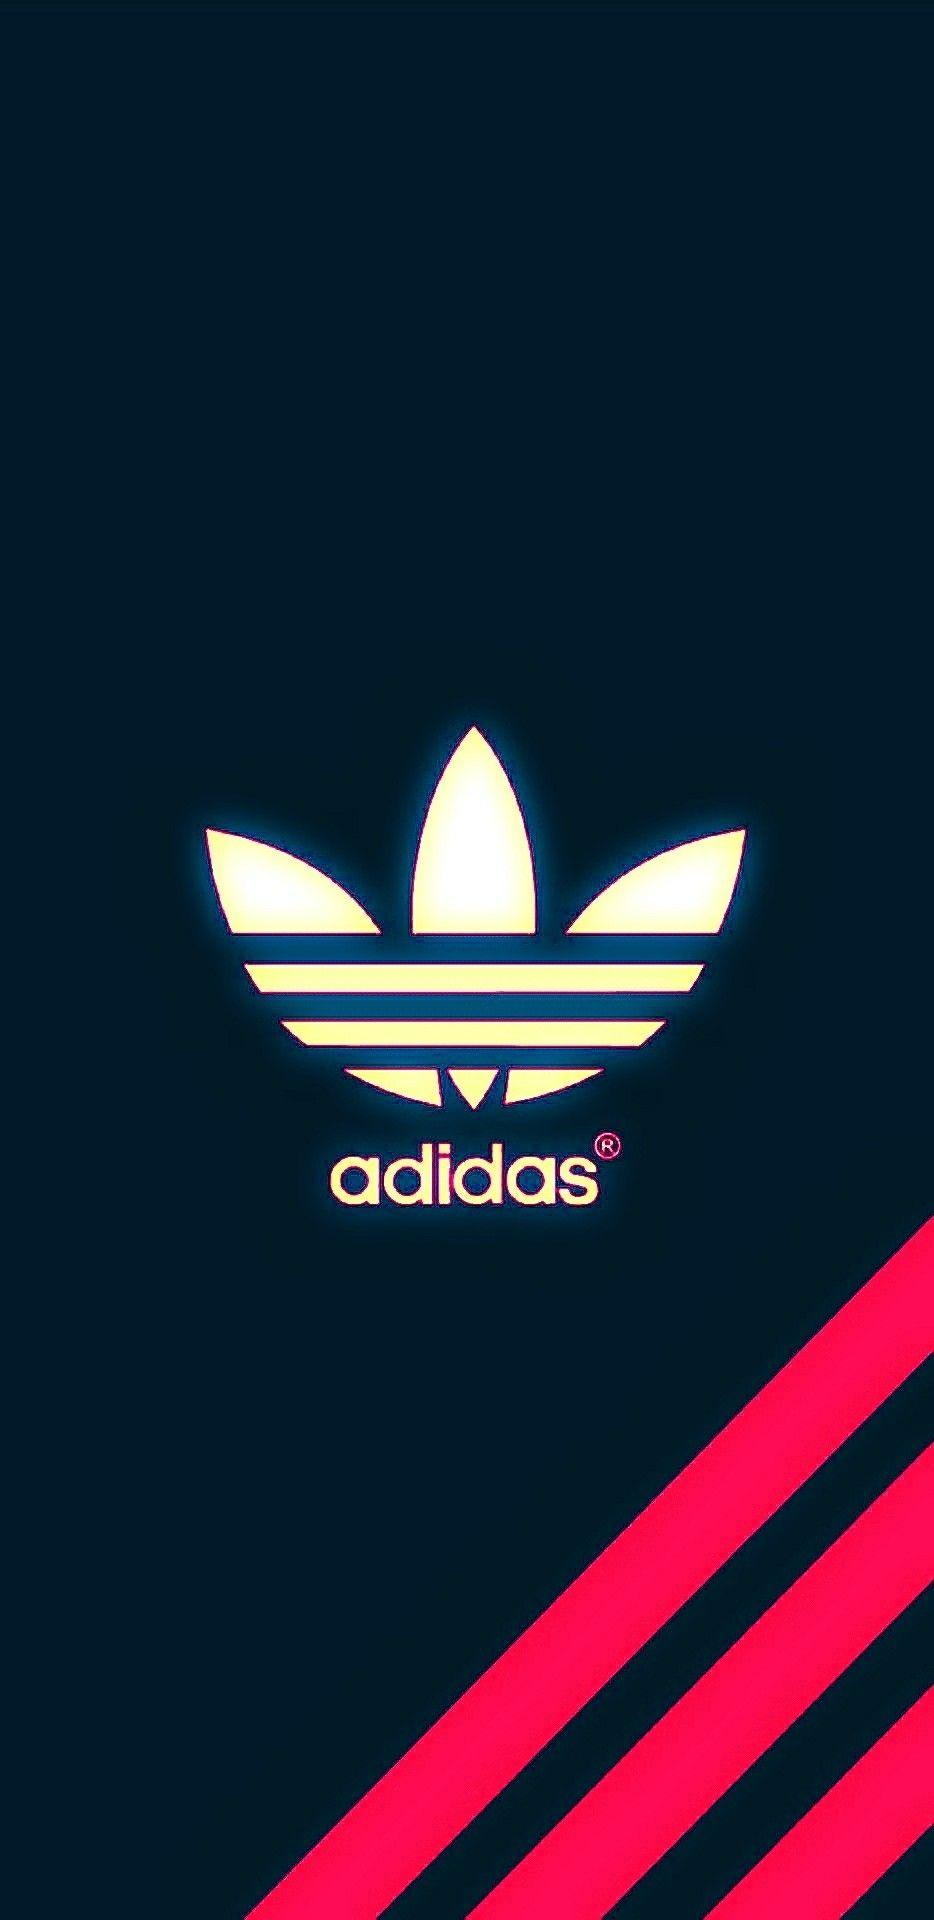 Adidas (Three Stripes) Wallpaper Background. Brands